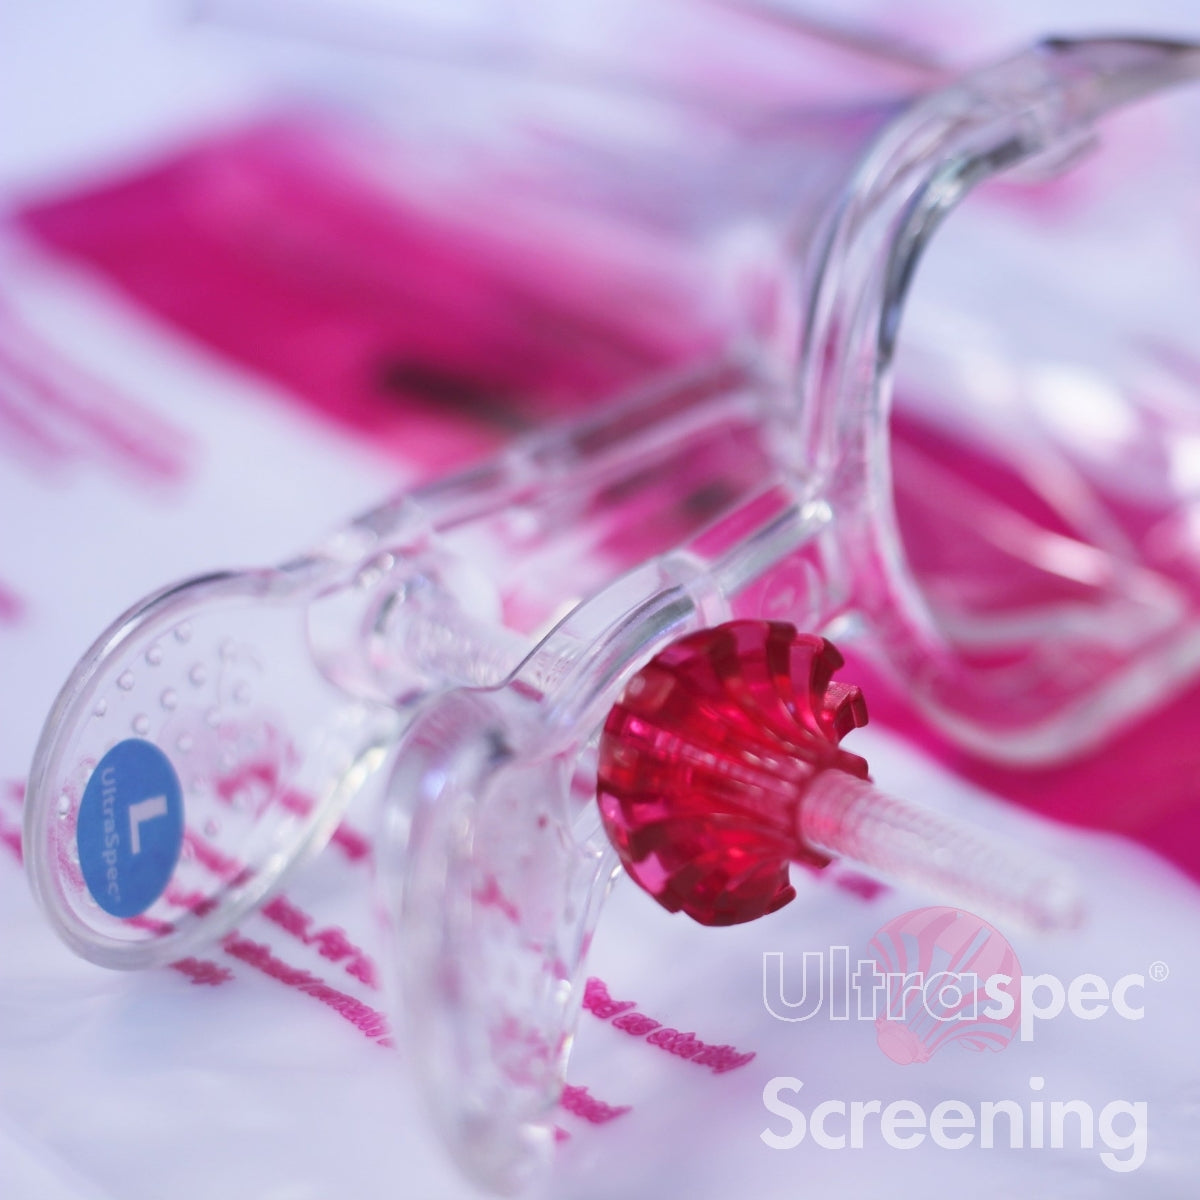 Ultraspec® Screening Speculum - Broad - Single